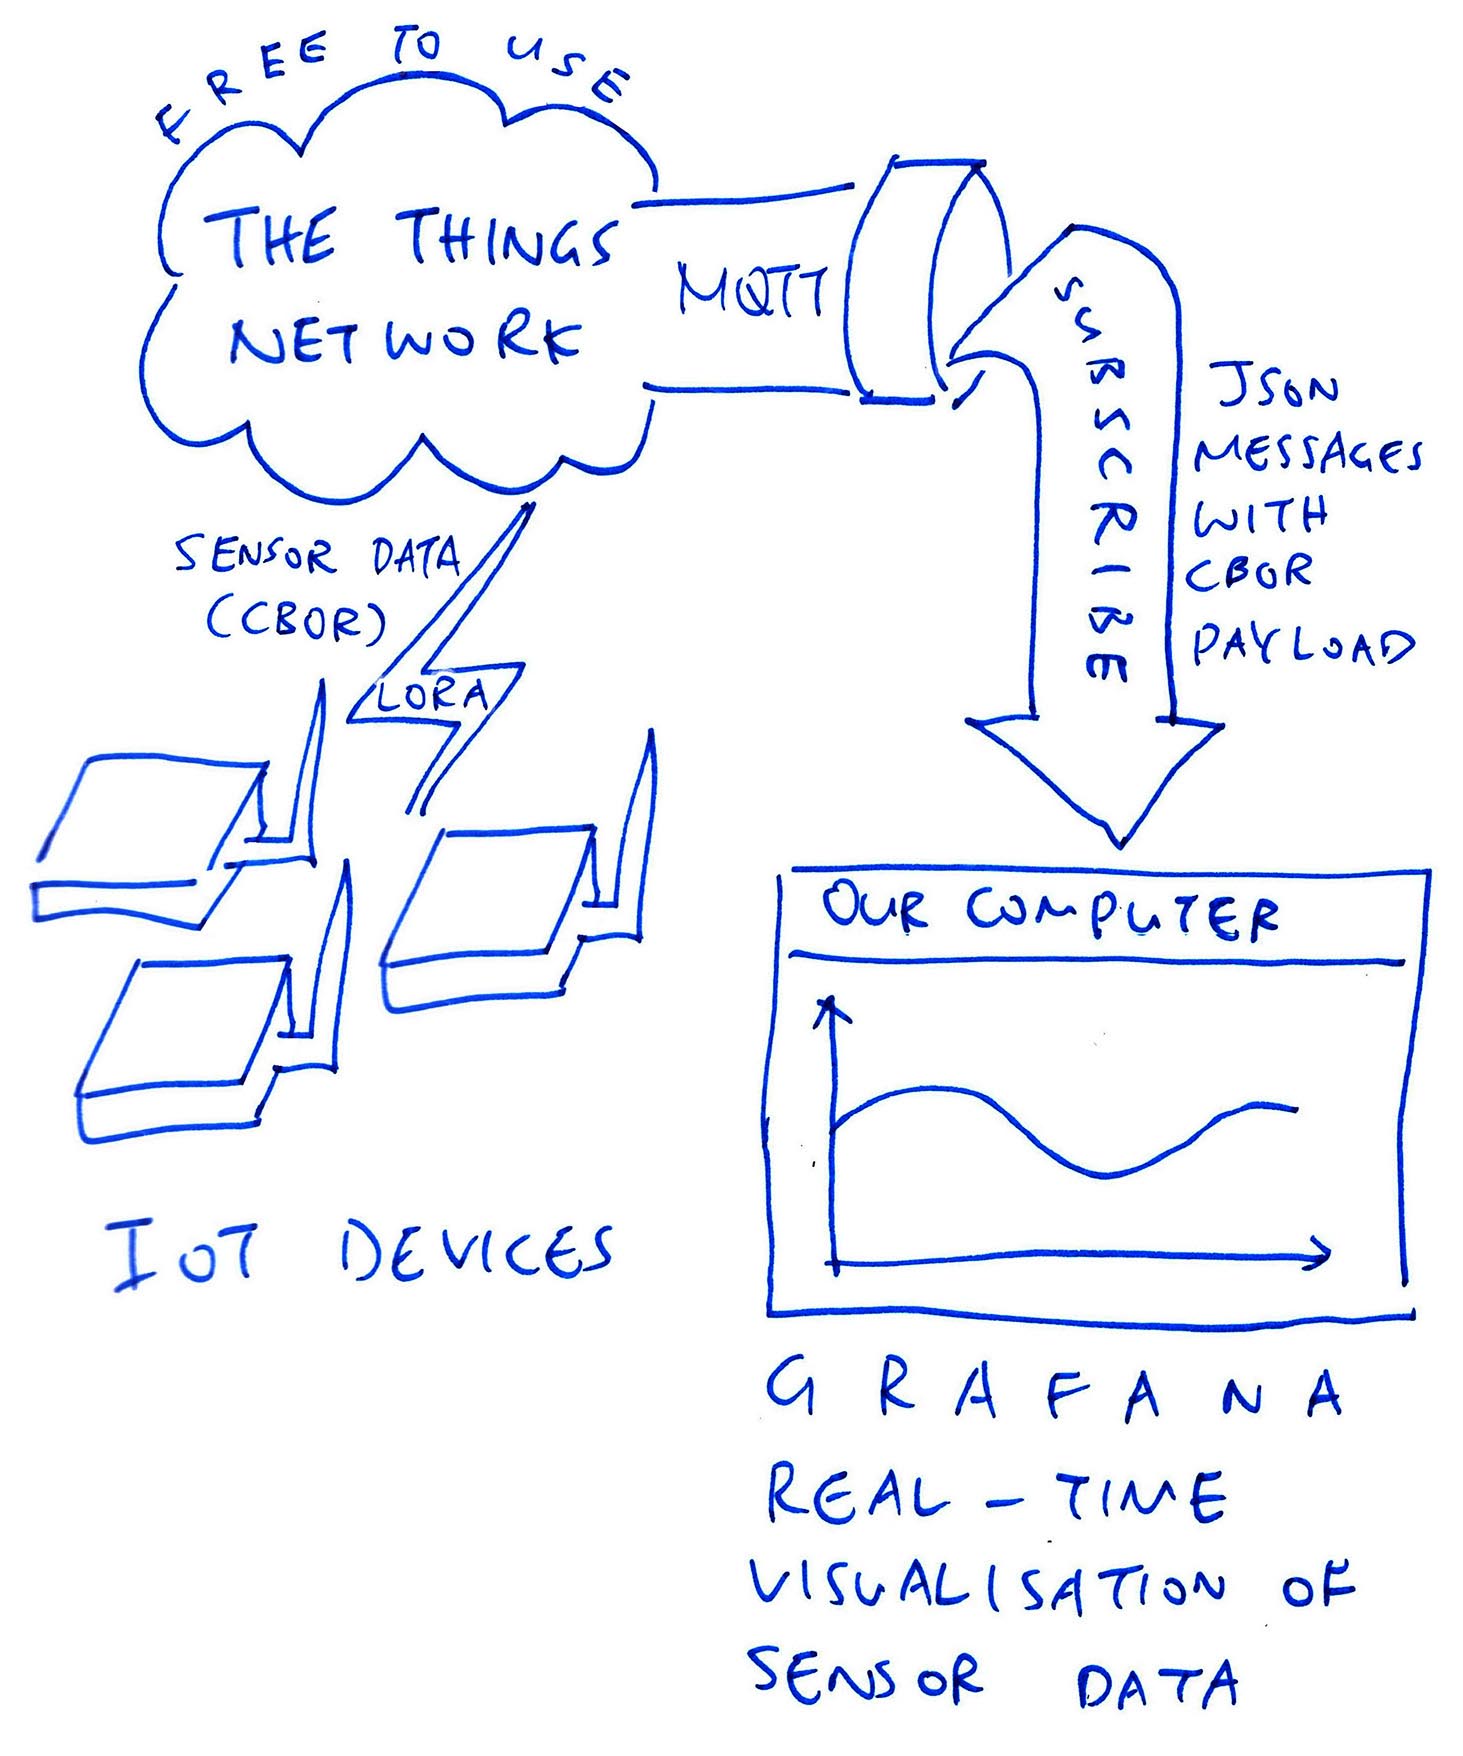 Visualising The Things Network Sensor Data with Grafana